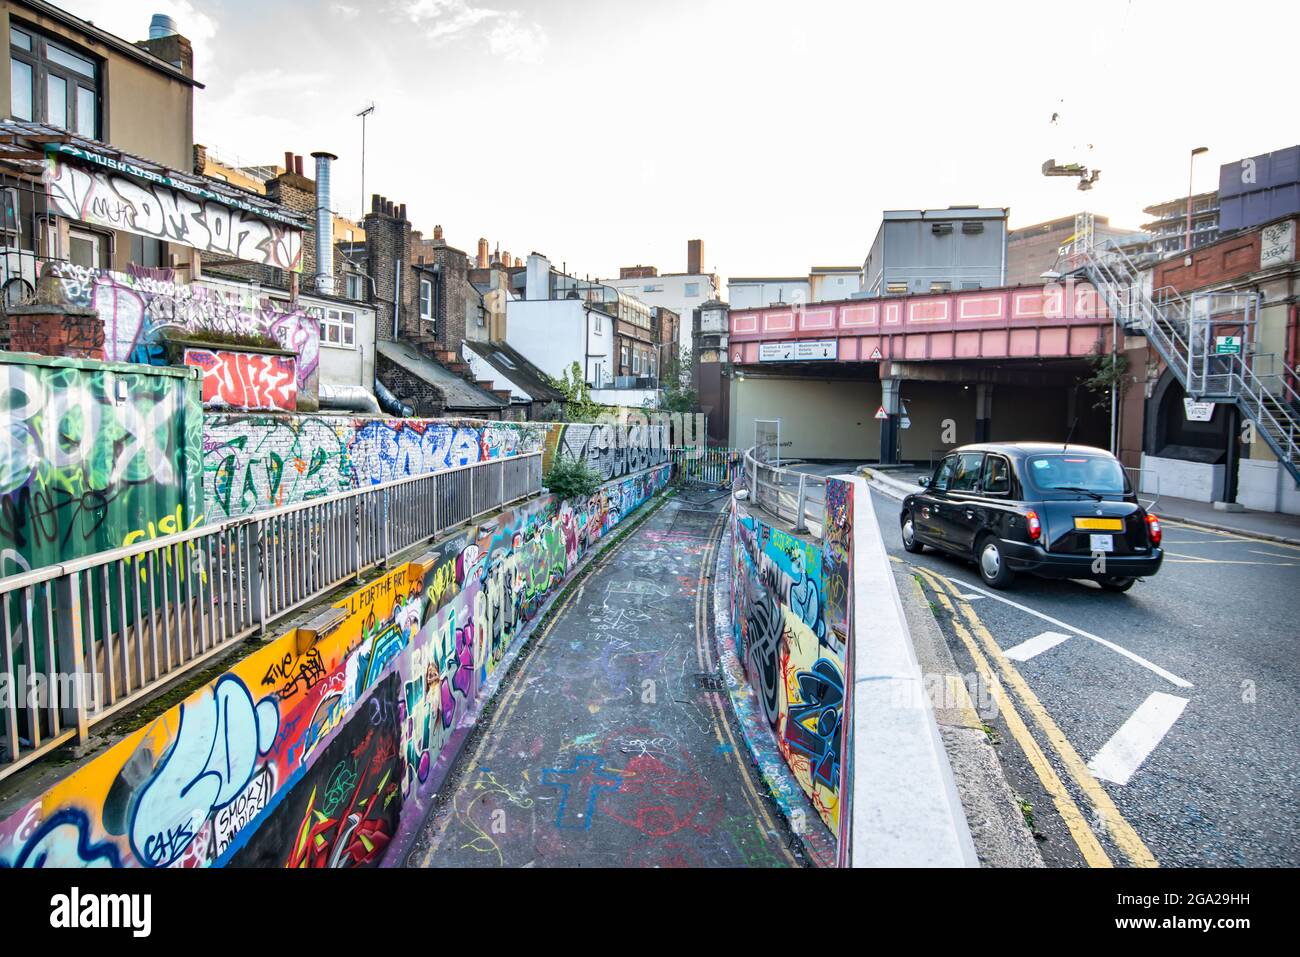 The Tunnel graffiti area, London Stock Photo